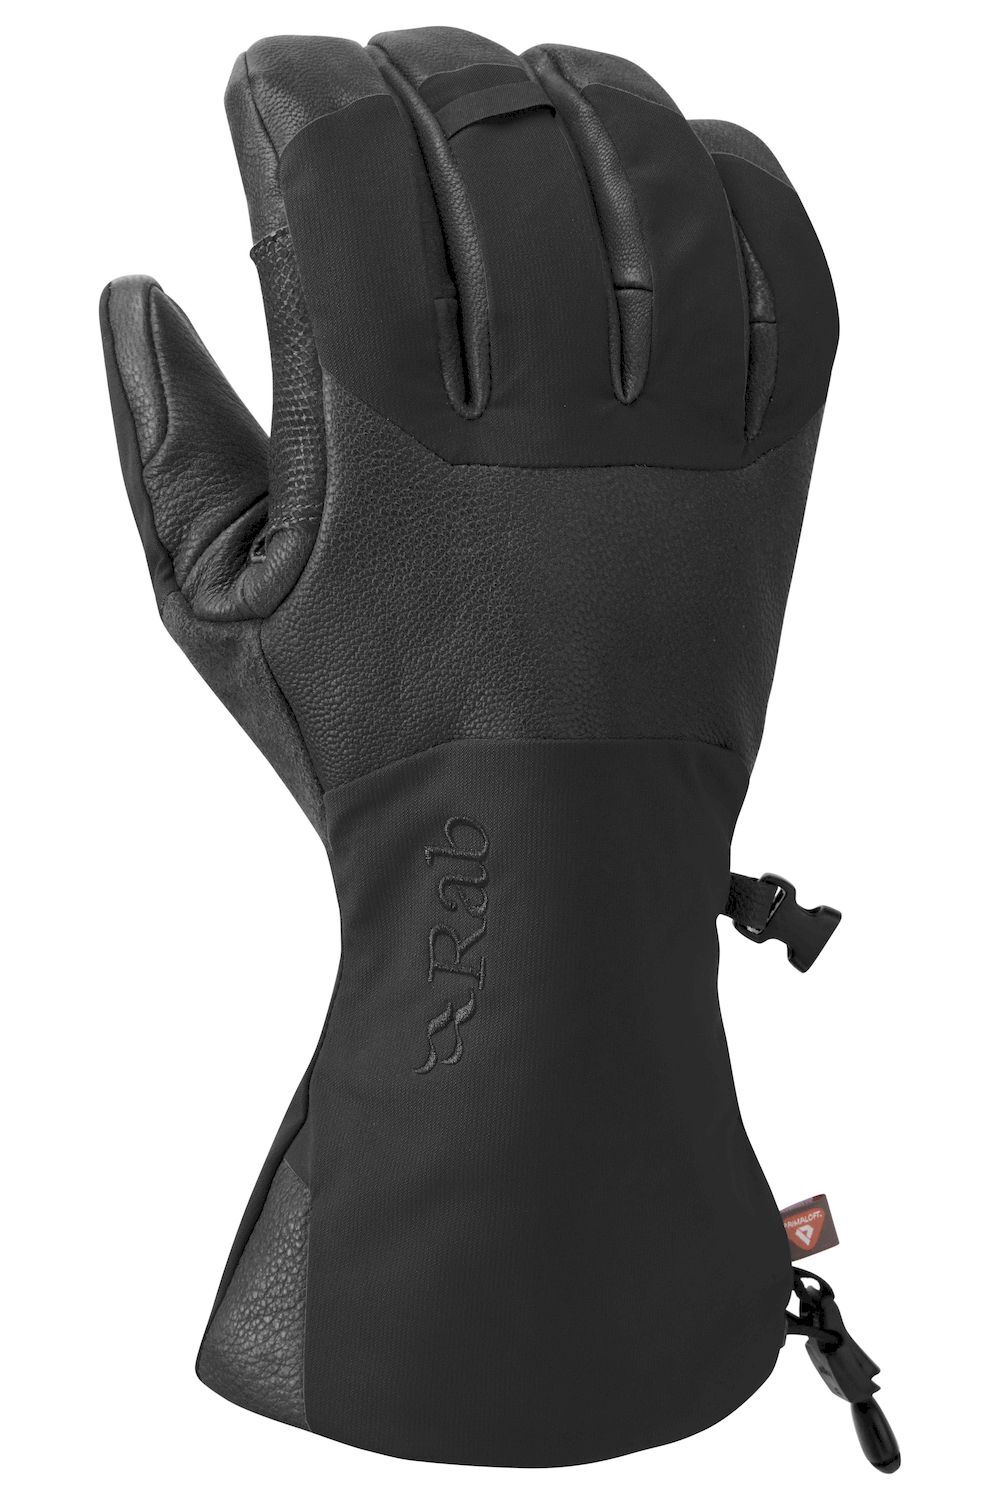 Rab Guide 2 GTX Gloves - Handschoenen